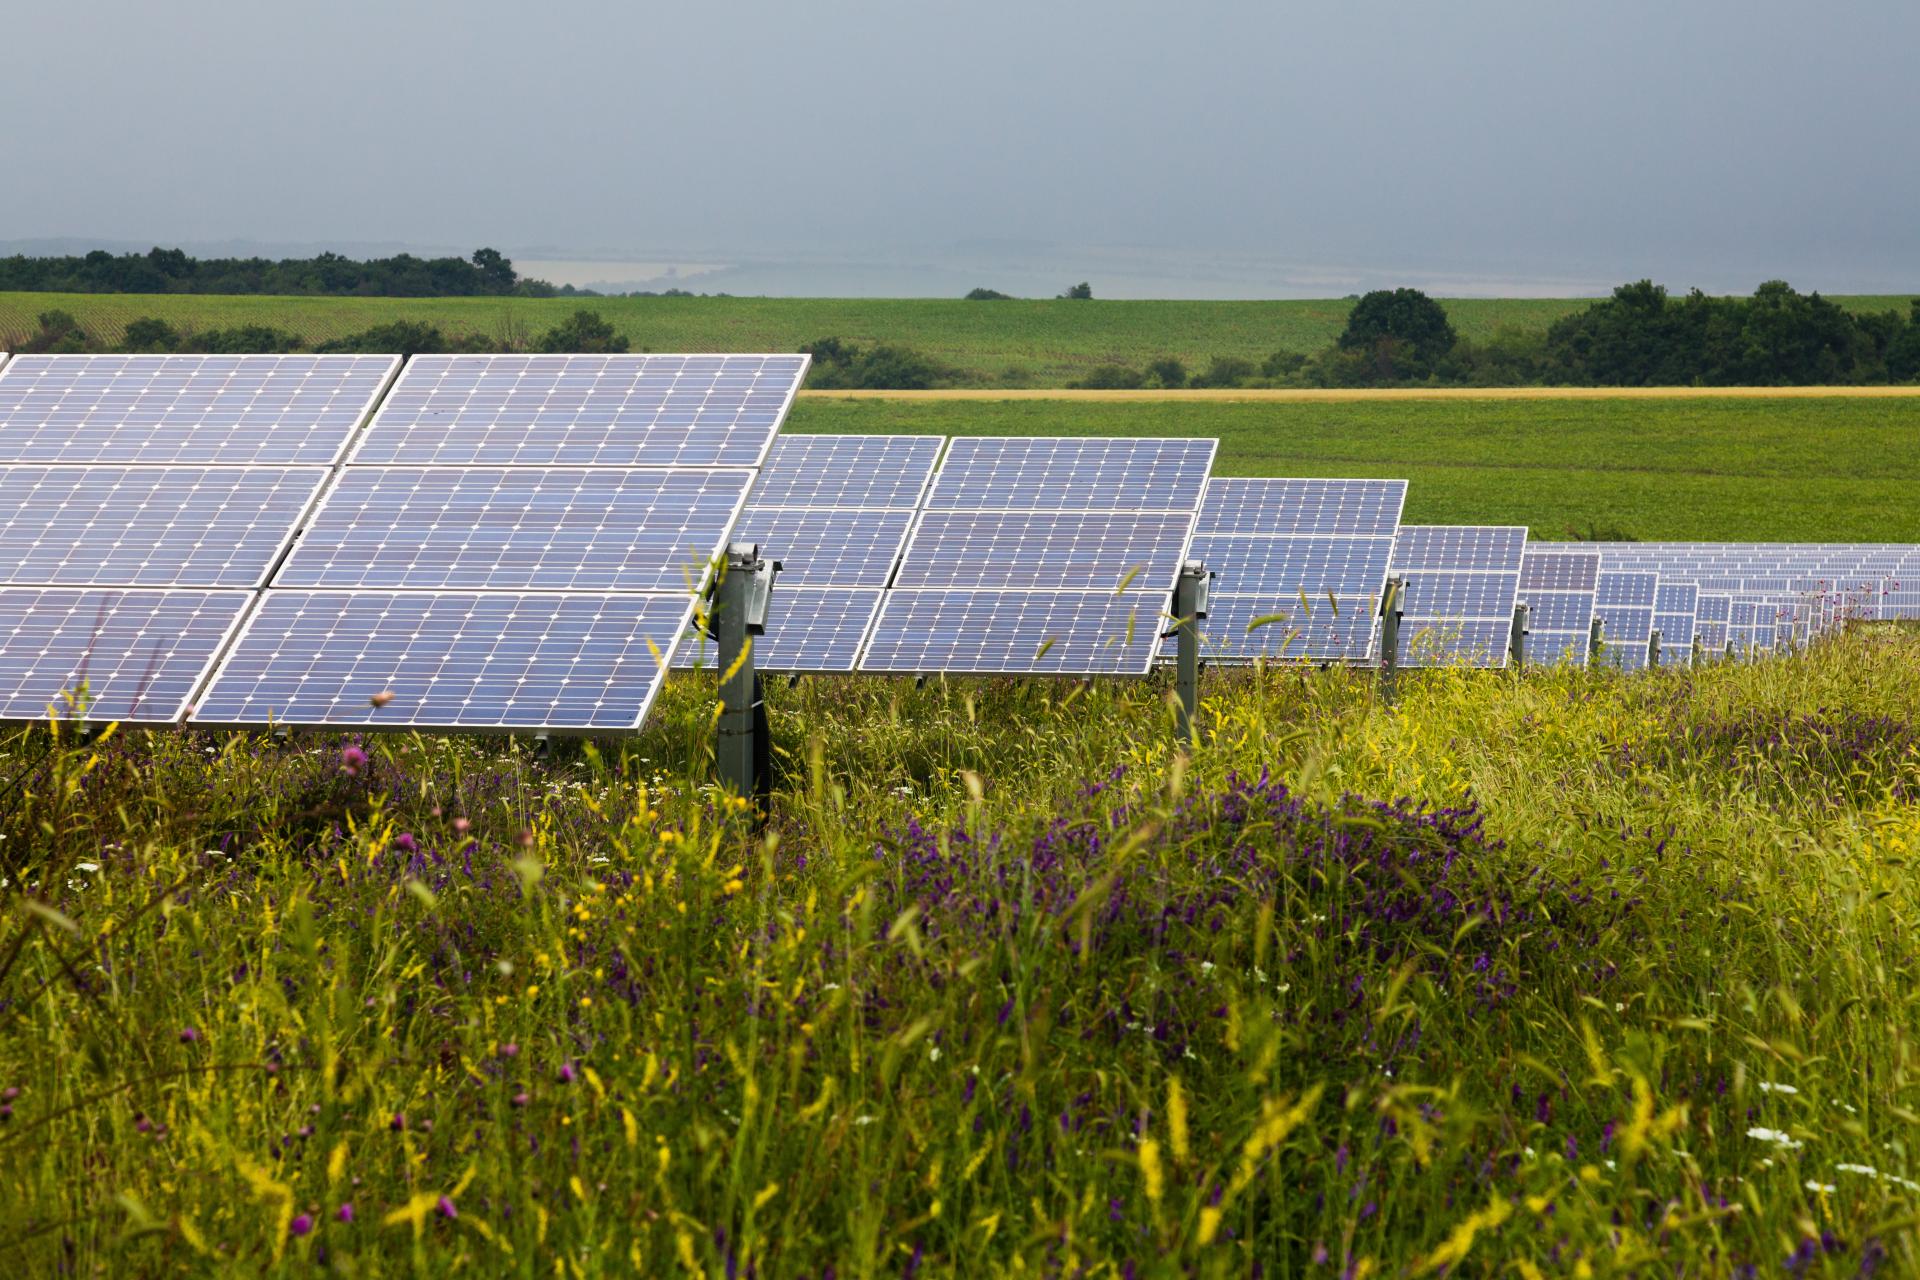 Ground view of a utility-scale solar farm 